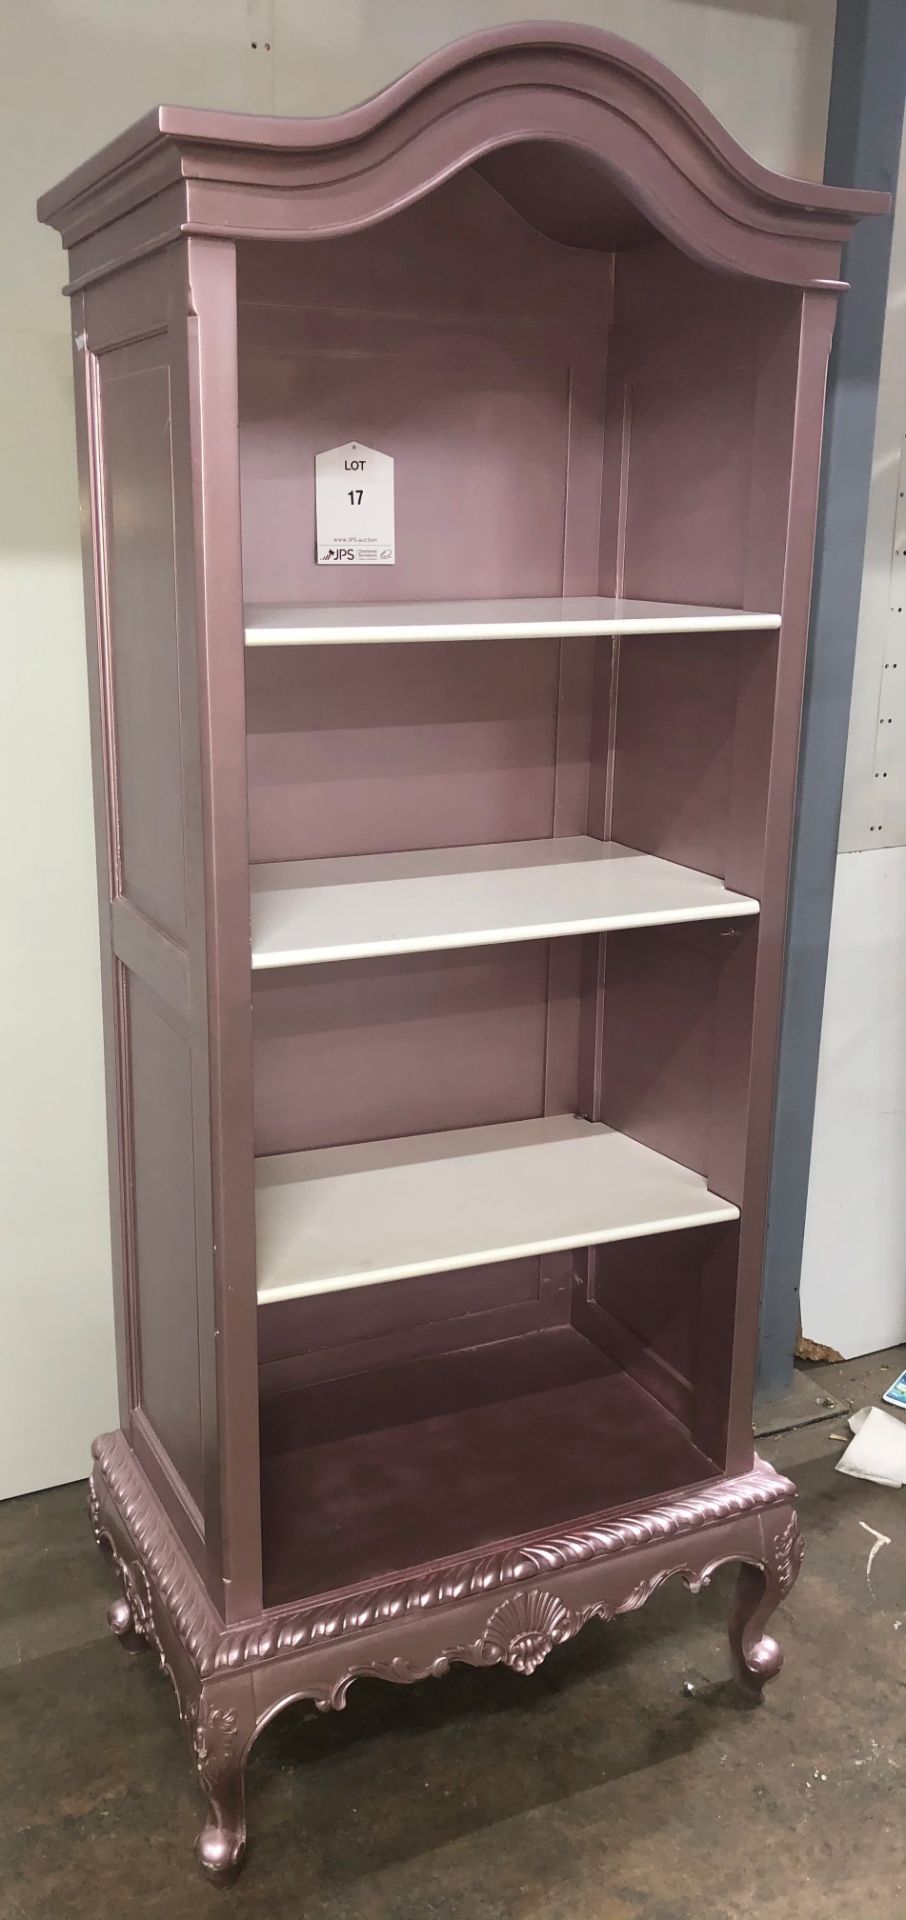 Wooden 3 Shelf Storage Unit in Pink - Image 3 of 3